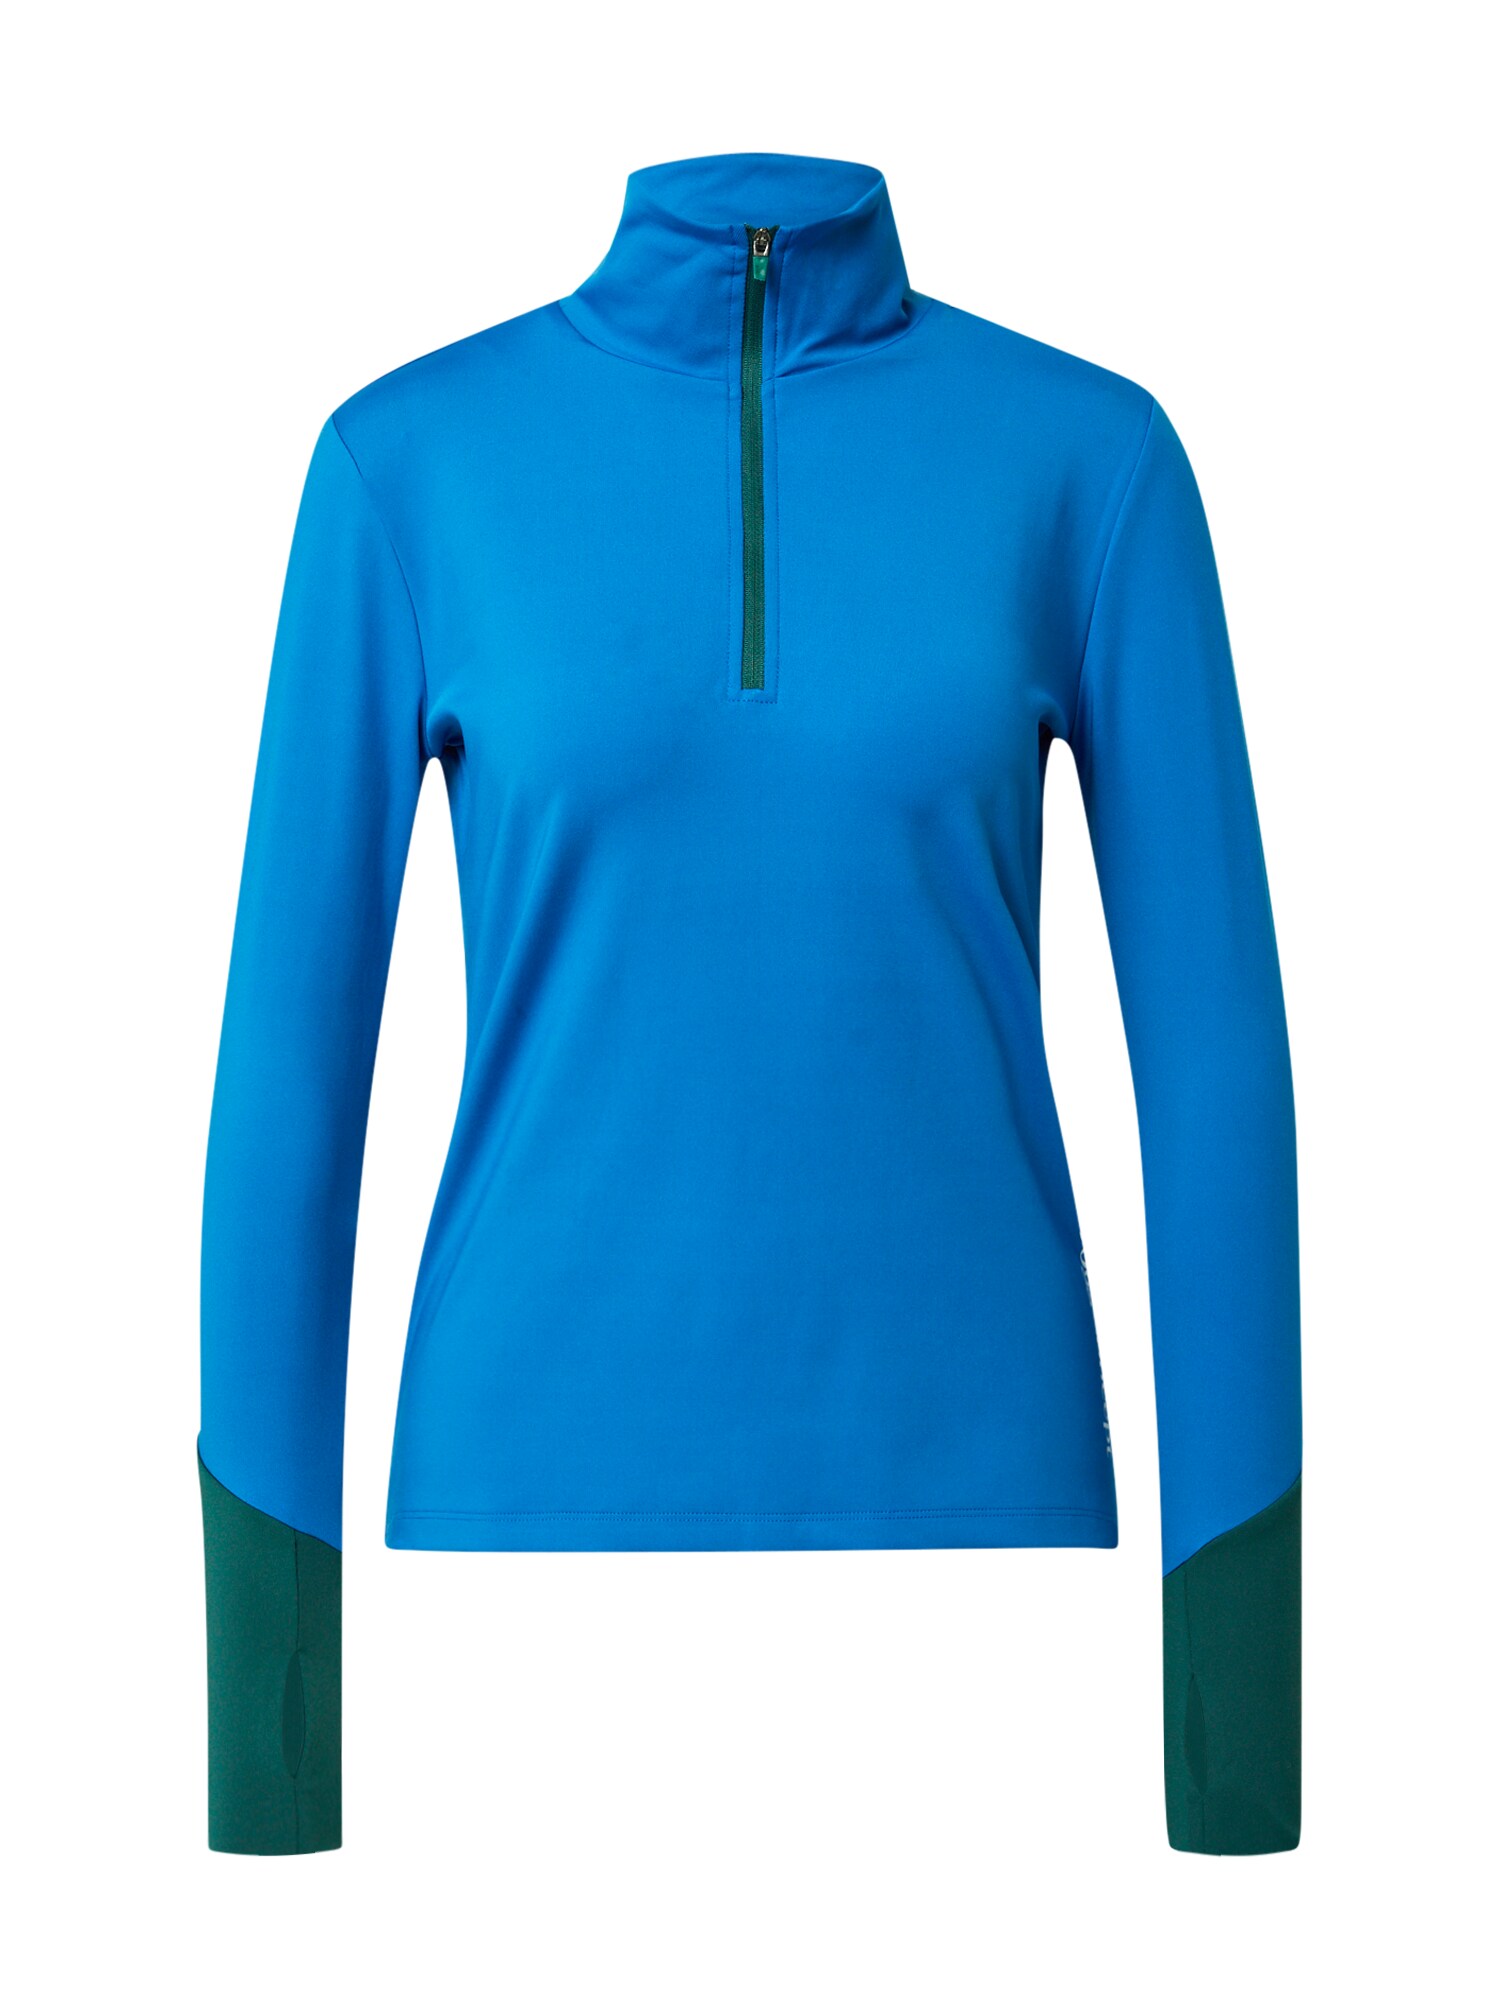 The Jogg Concept Marškinėliai 'SAMMI' mėlyna / tamsiai žalia